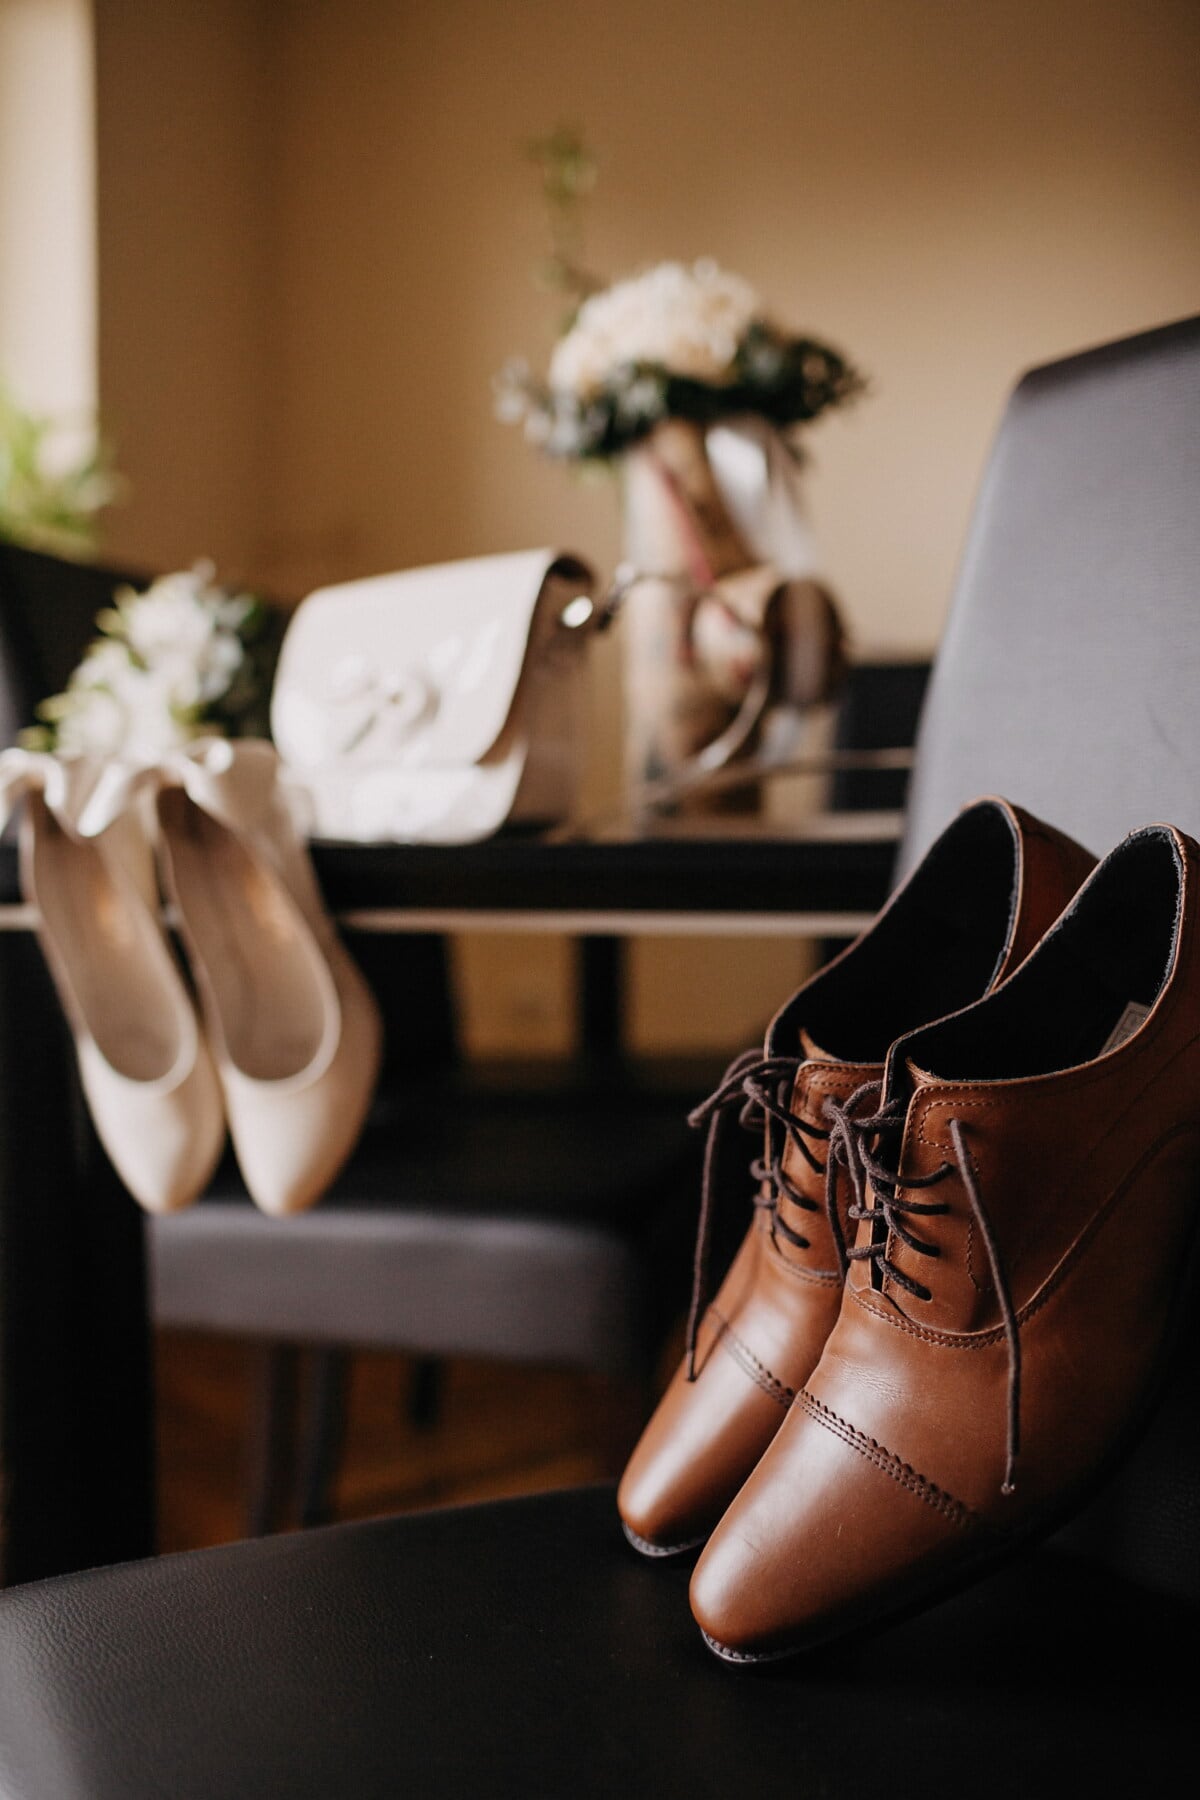 Sandale, Schuhe, Hochzeit, Klassiker, beiläufig, Lebensstil, moderne, Schuhe, Mode, Schuh